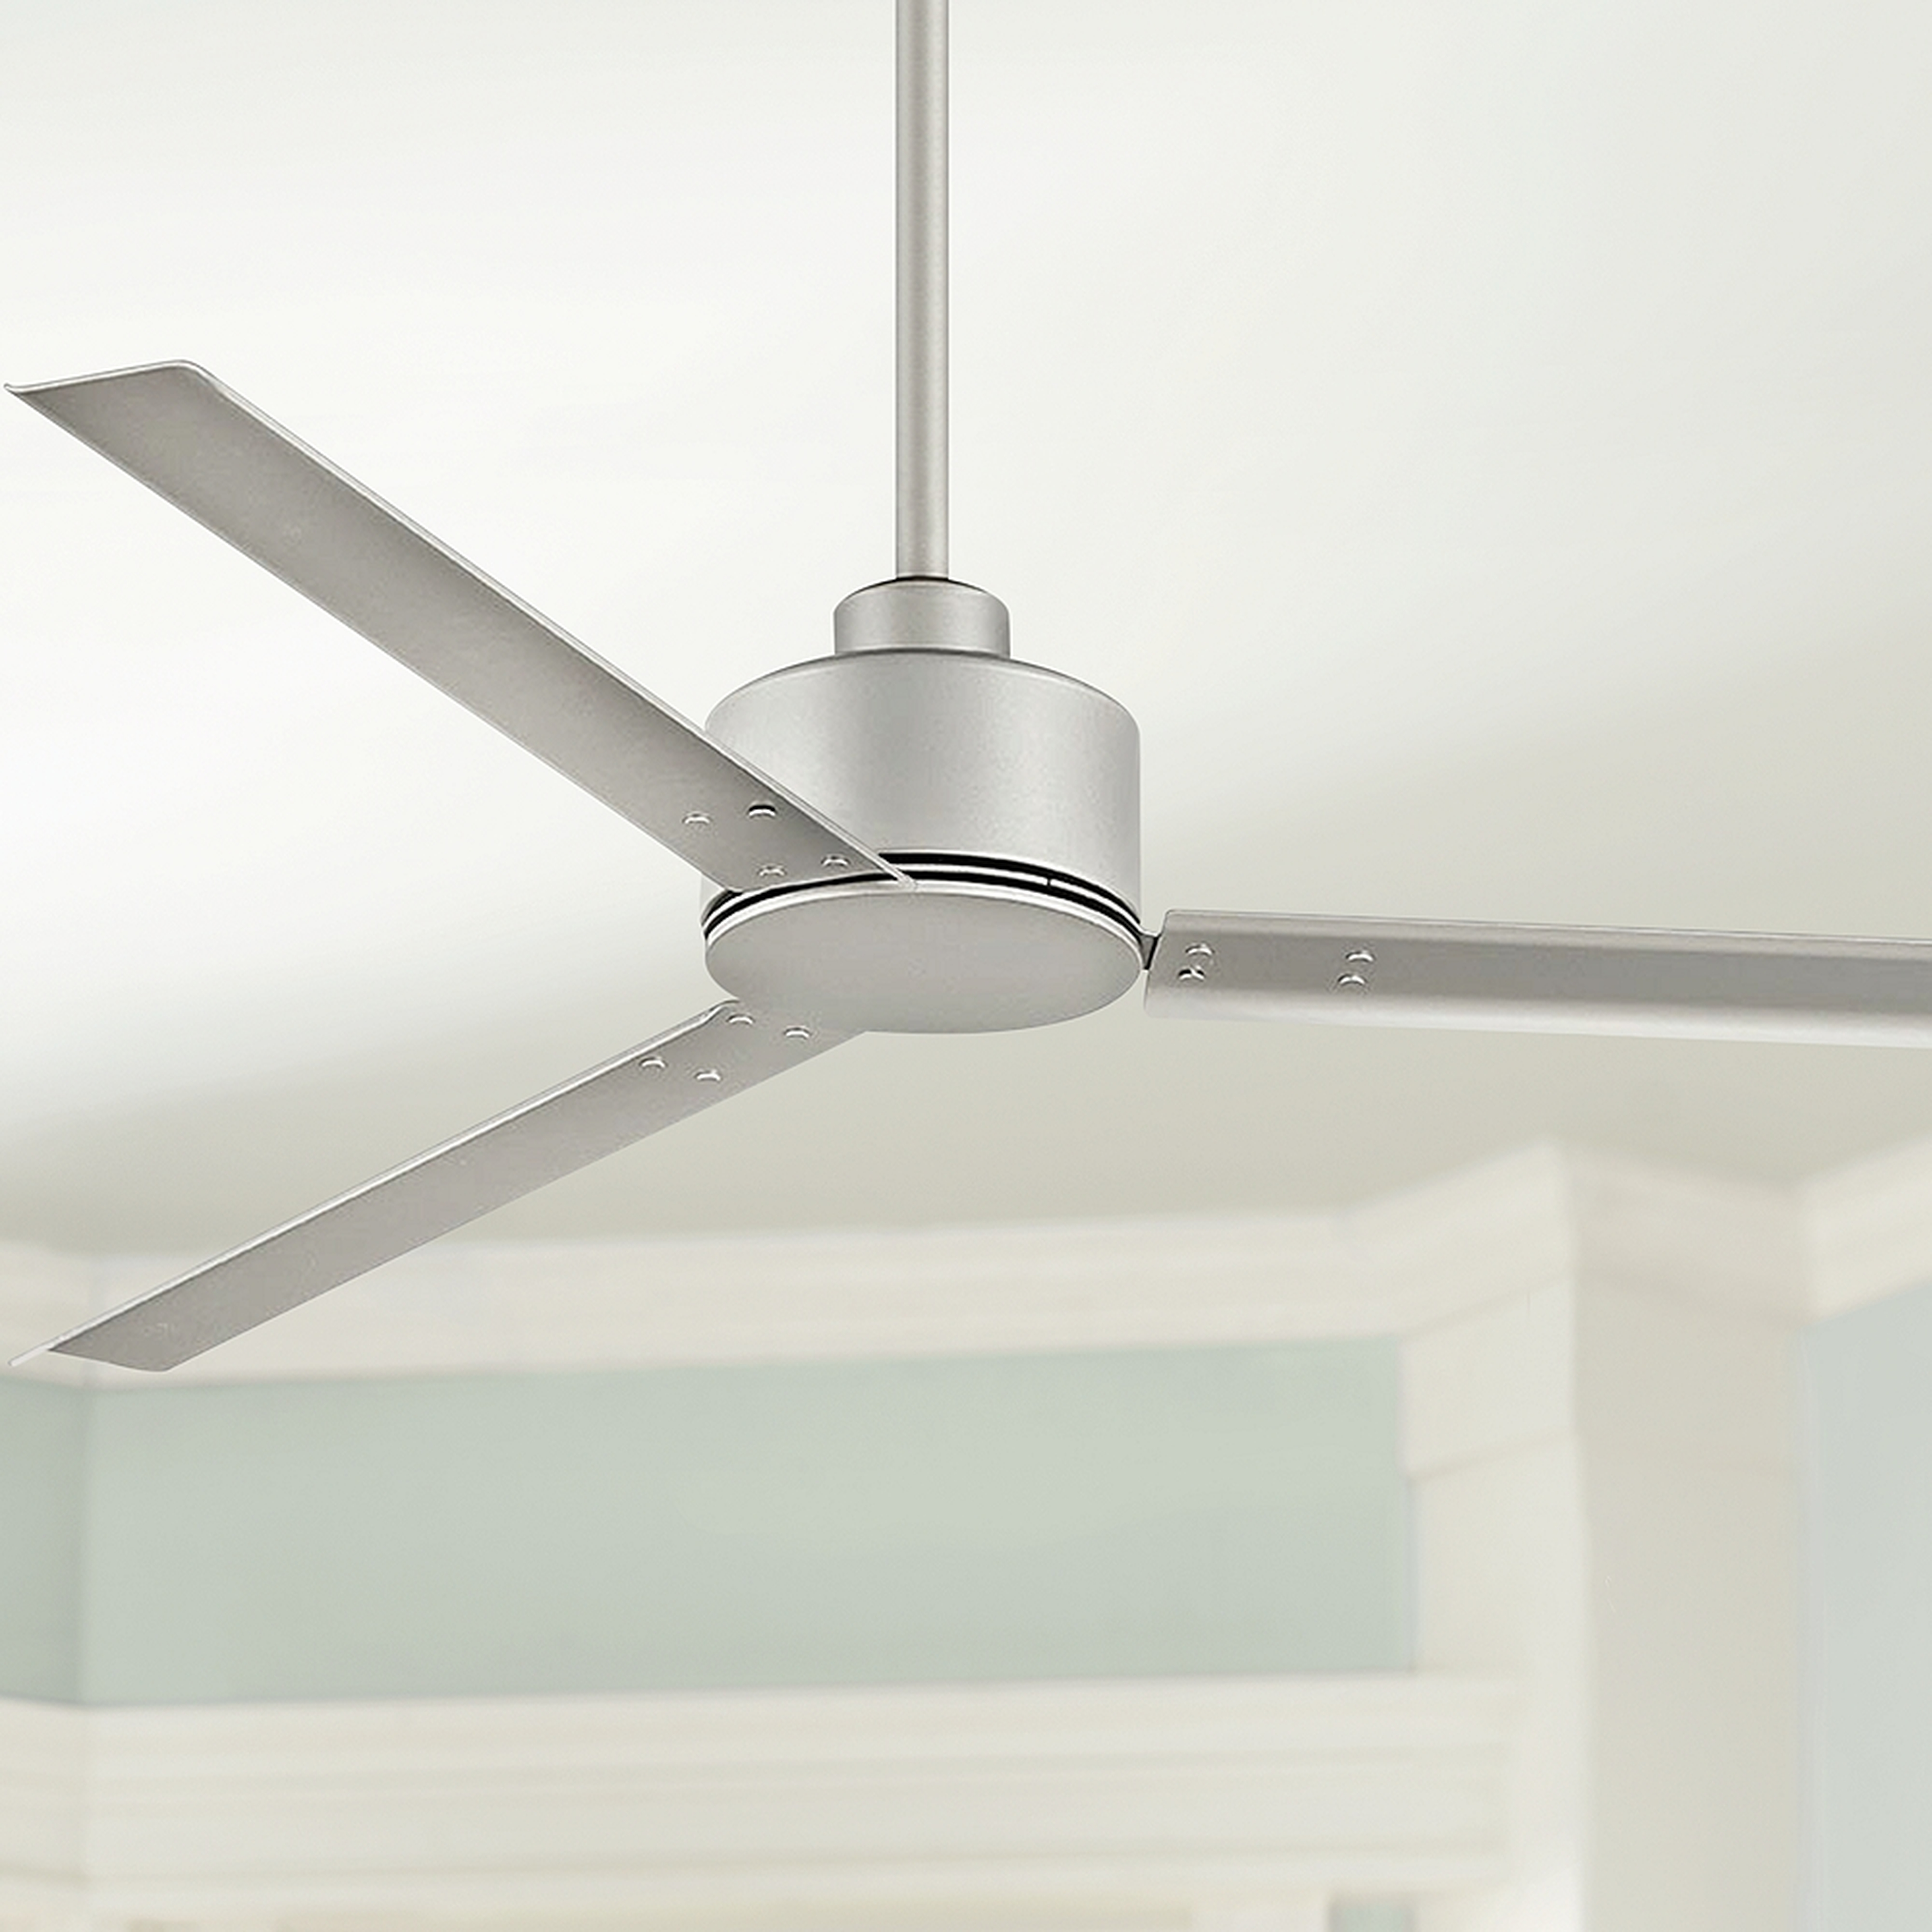 56" Hinkley Indy Brushed Nickel Ceiling Fan - Style # 84K03 - Lamps Plus